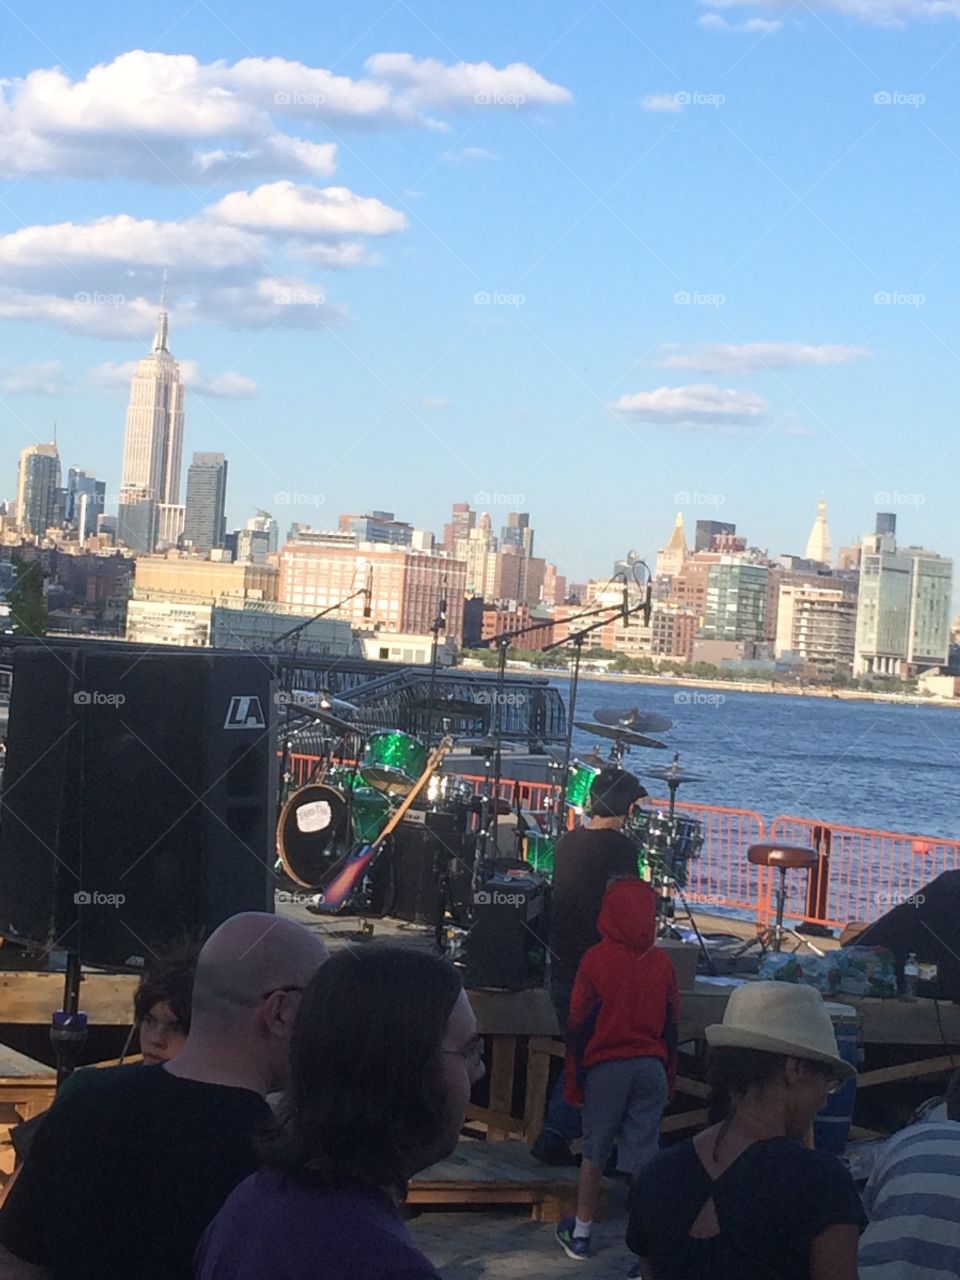 Hoboken music festival with NYC skyline